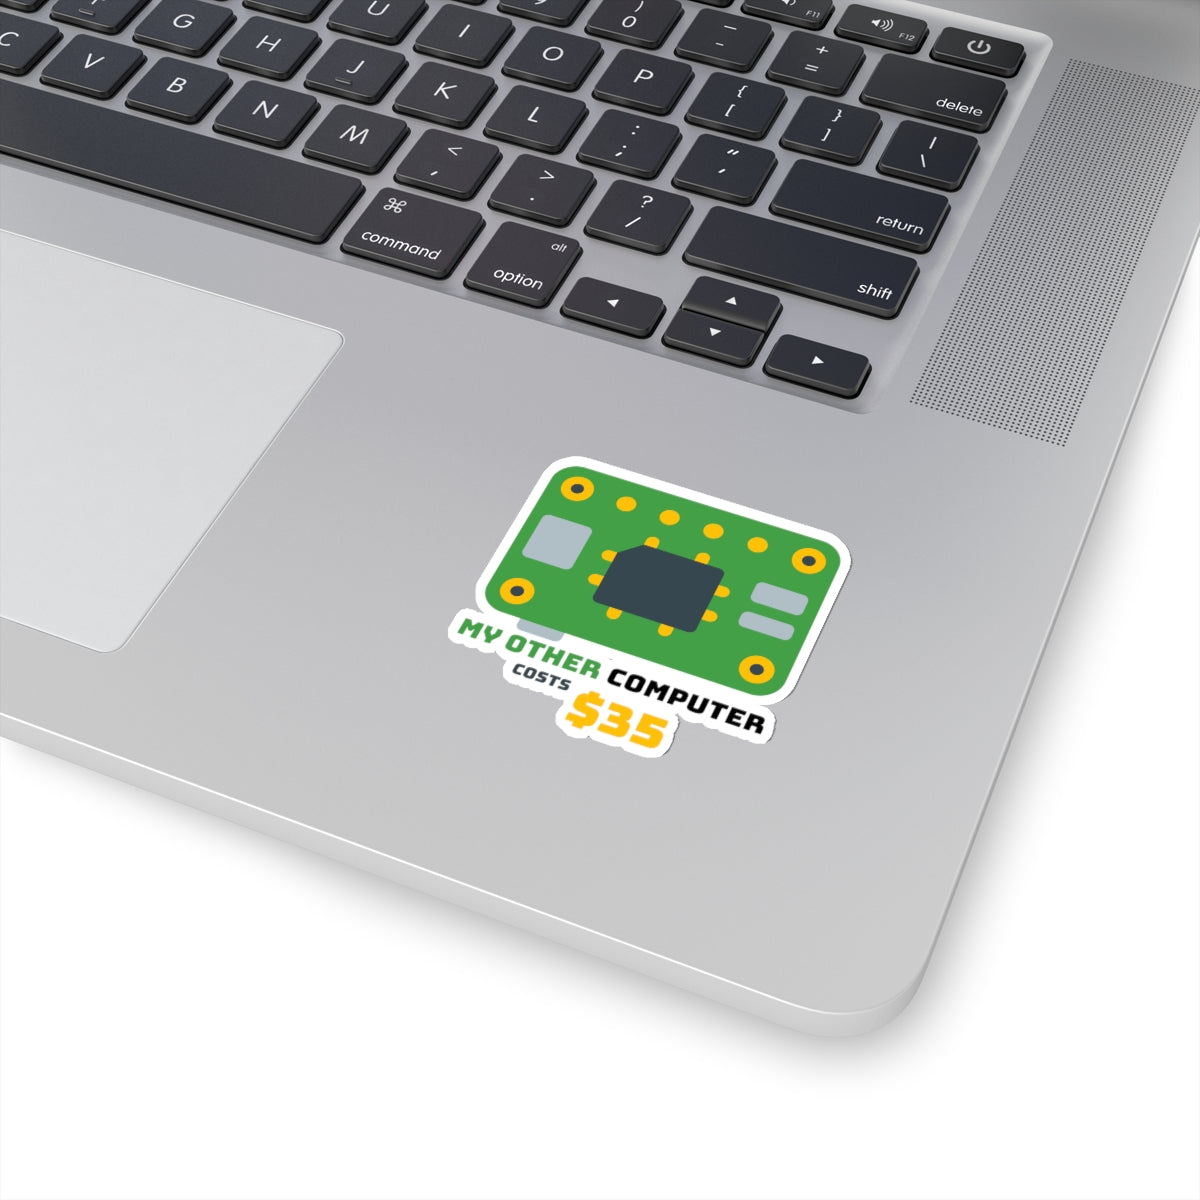 My other computer / Rasberrypi - Developer / Programmer / Software Engineer Kiss Cut Sticker